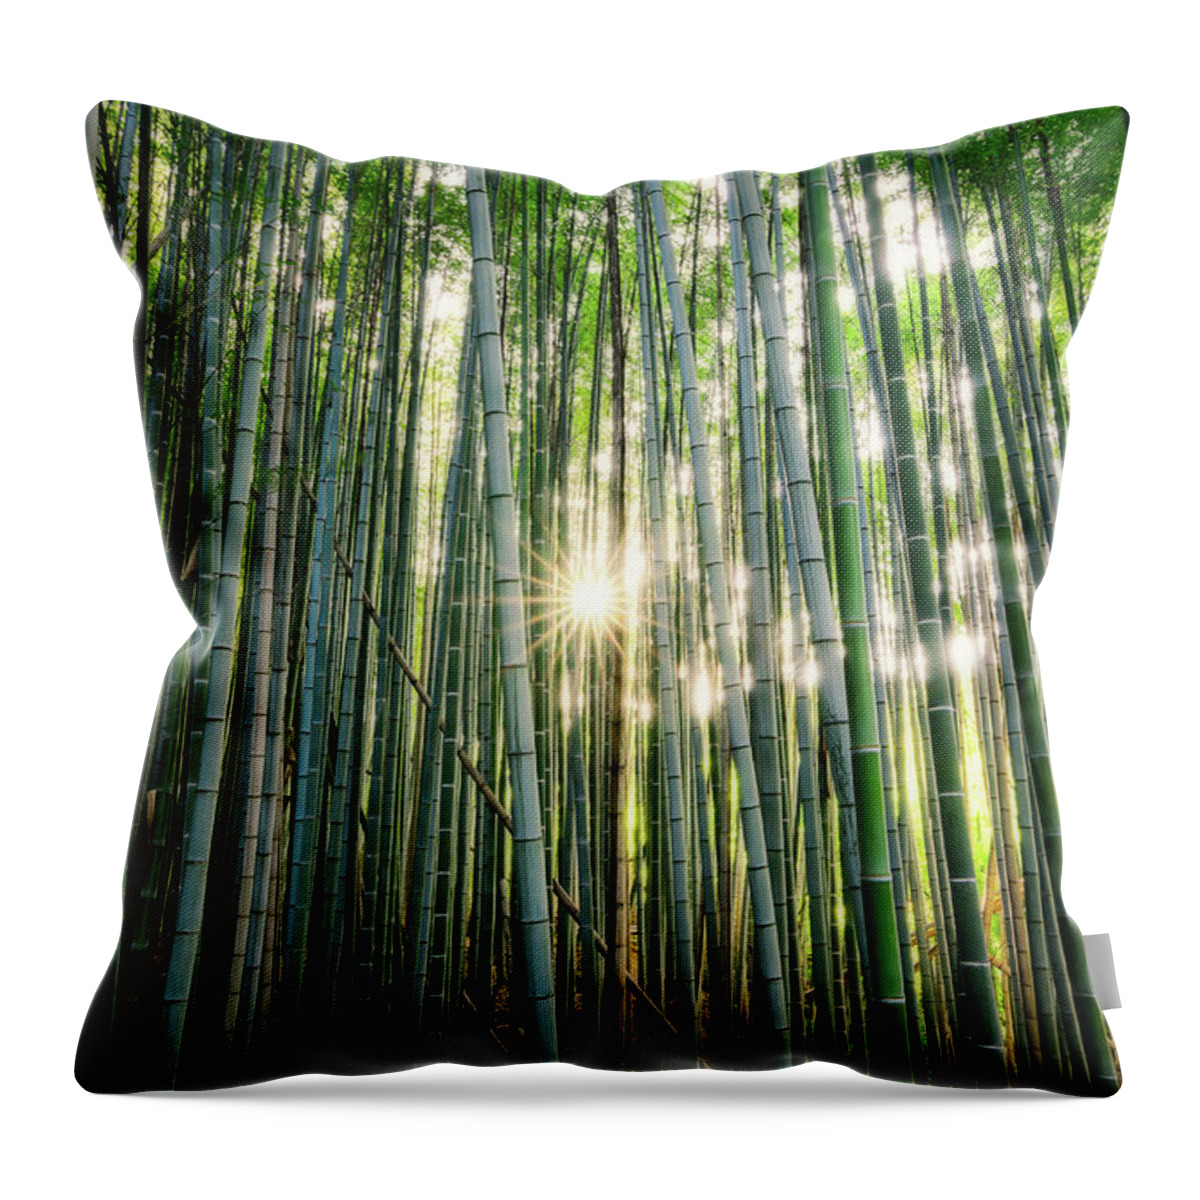 Arashiyama Throw Pillow featuring the photograph Bamboo forest at Arashiyama #1 by Craig Szymanski